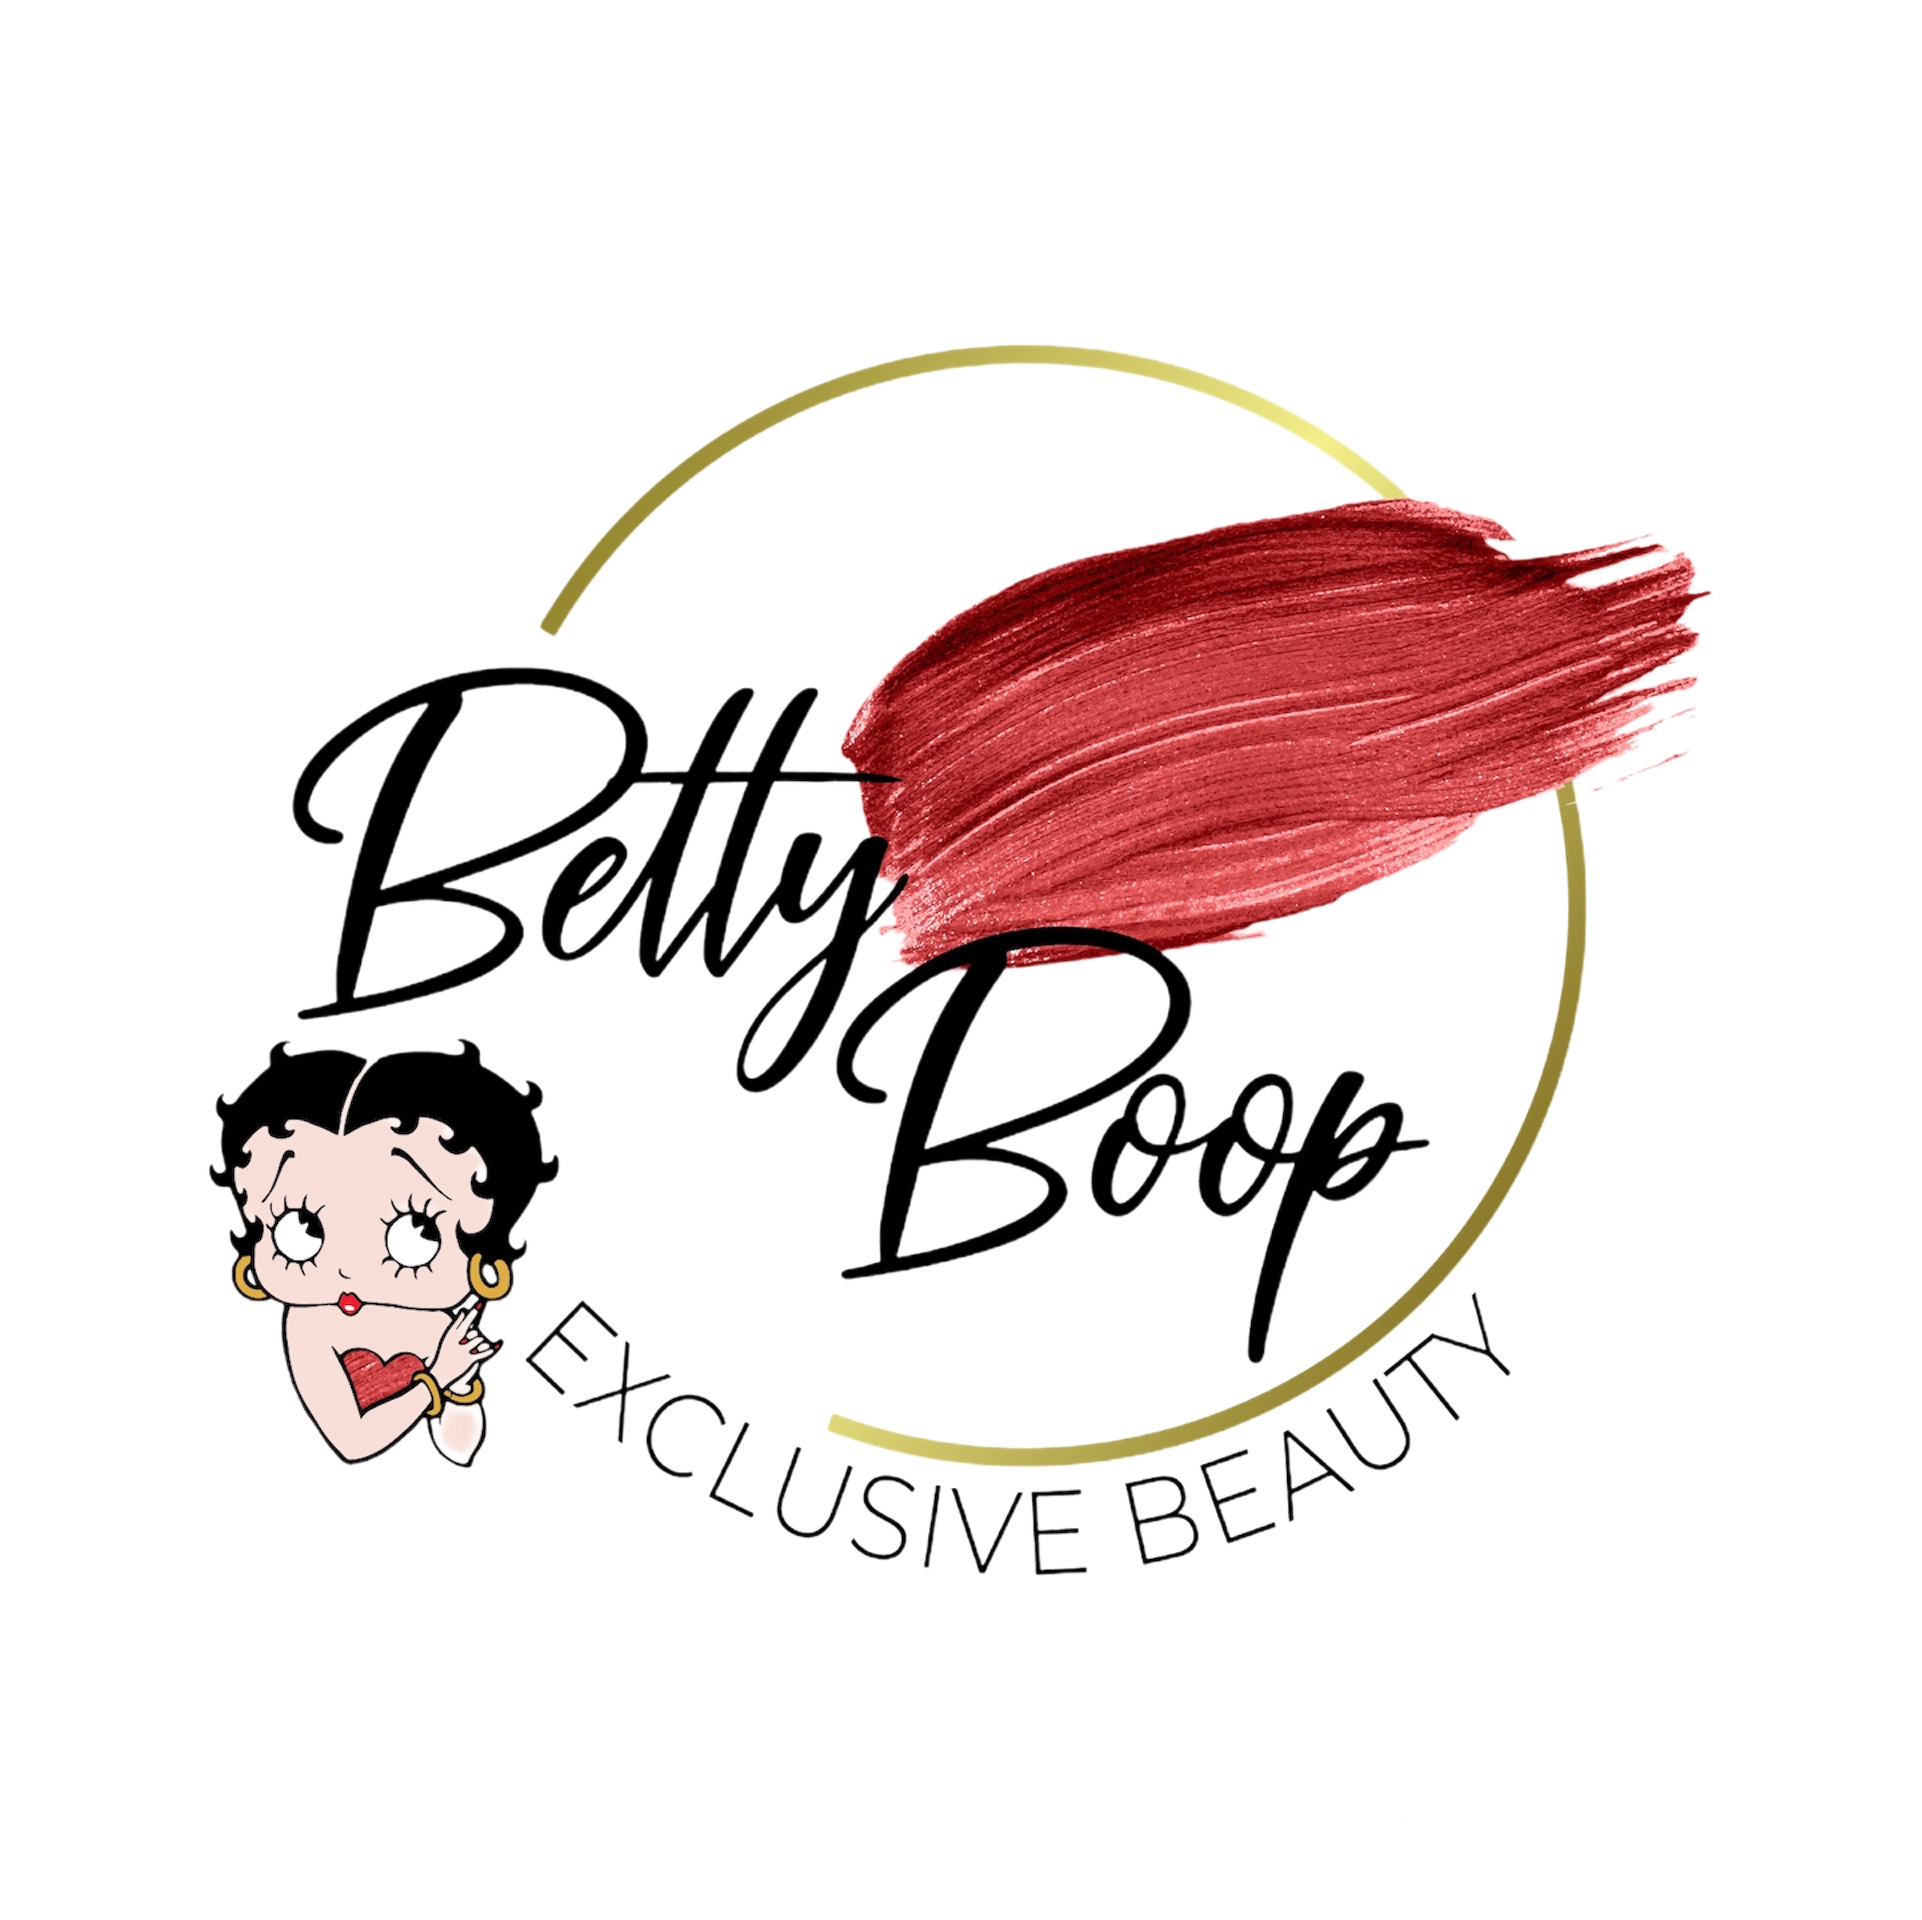 Betty Boop “Exlcusive” Beauty  logo